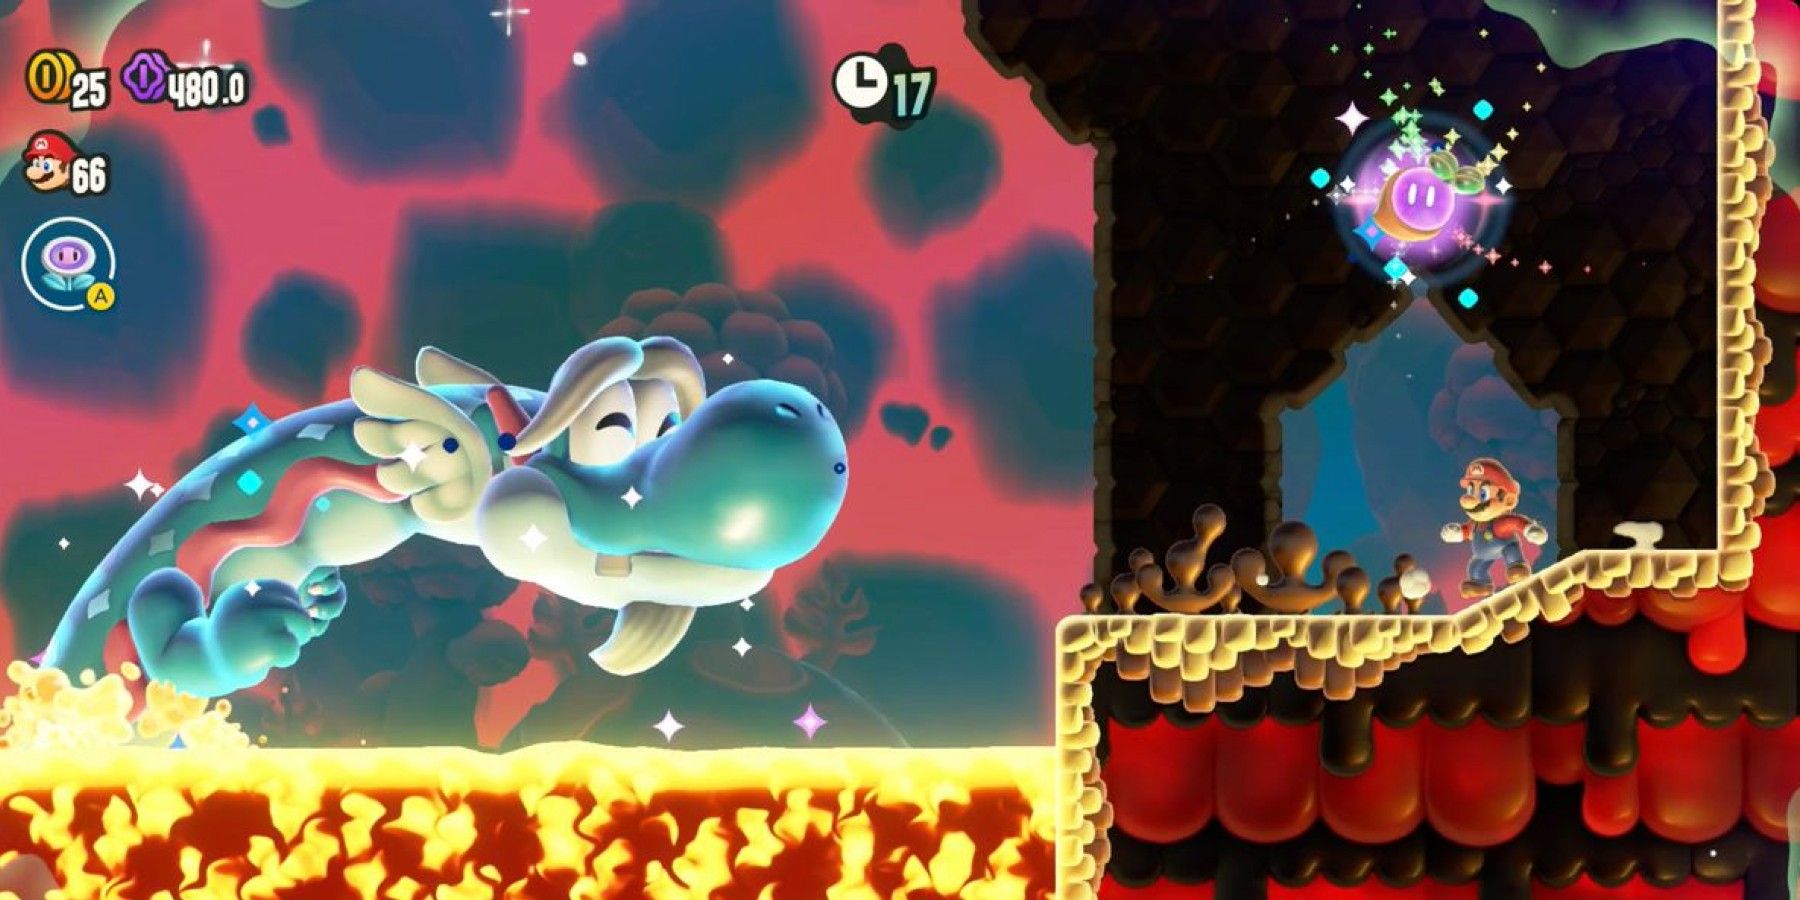 Nintendo says Super Mario Bros. Wonder soared due to multiplayer